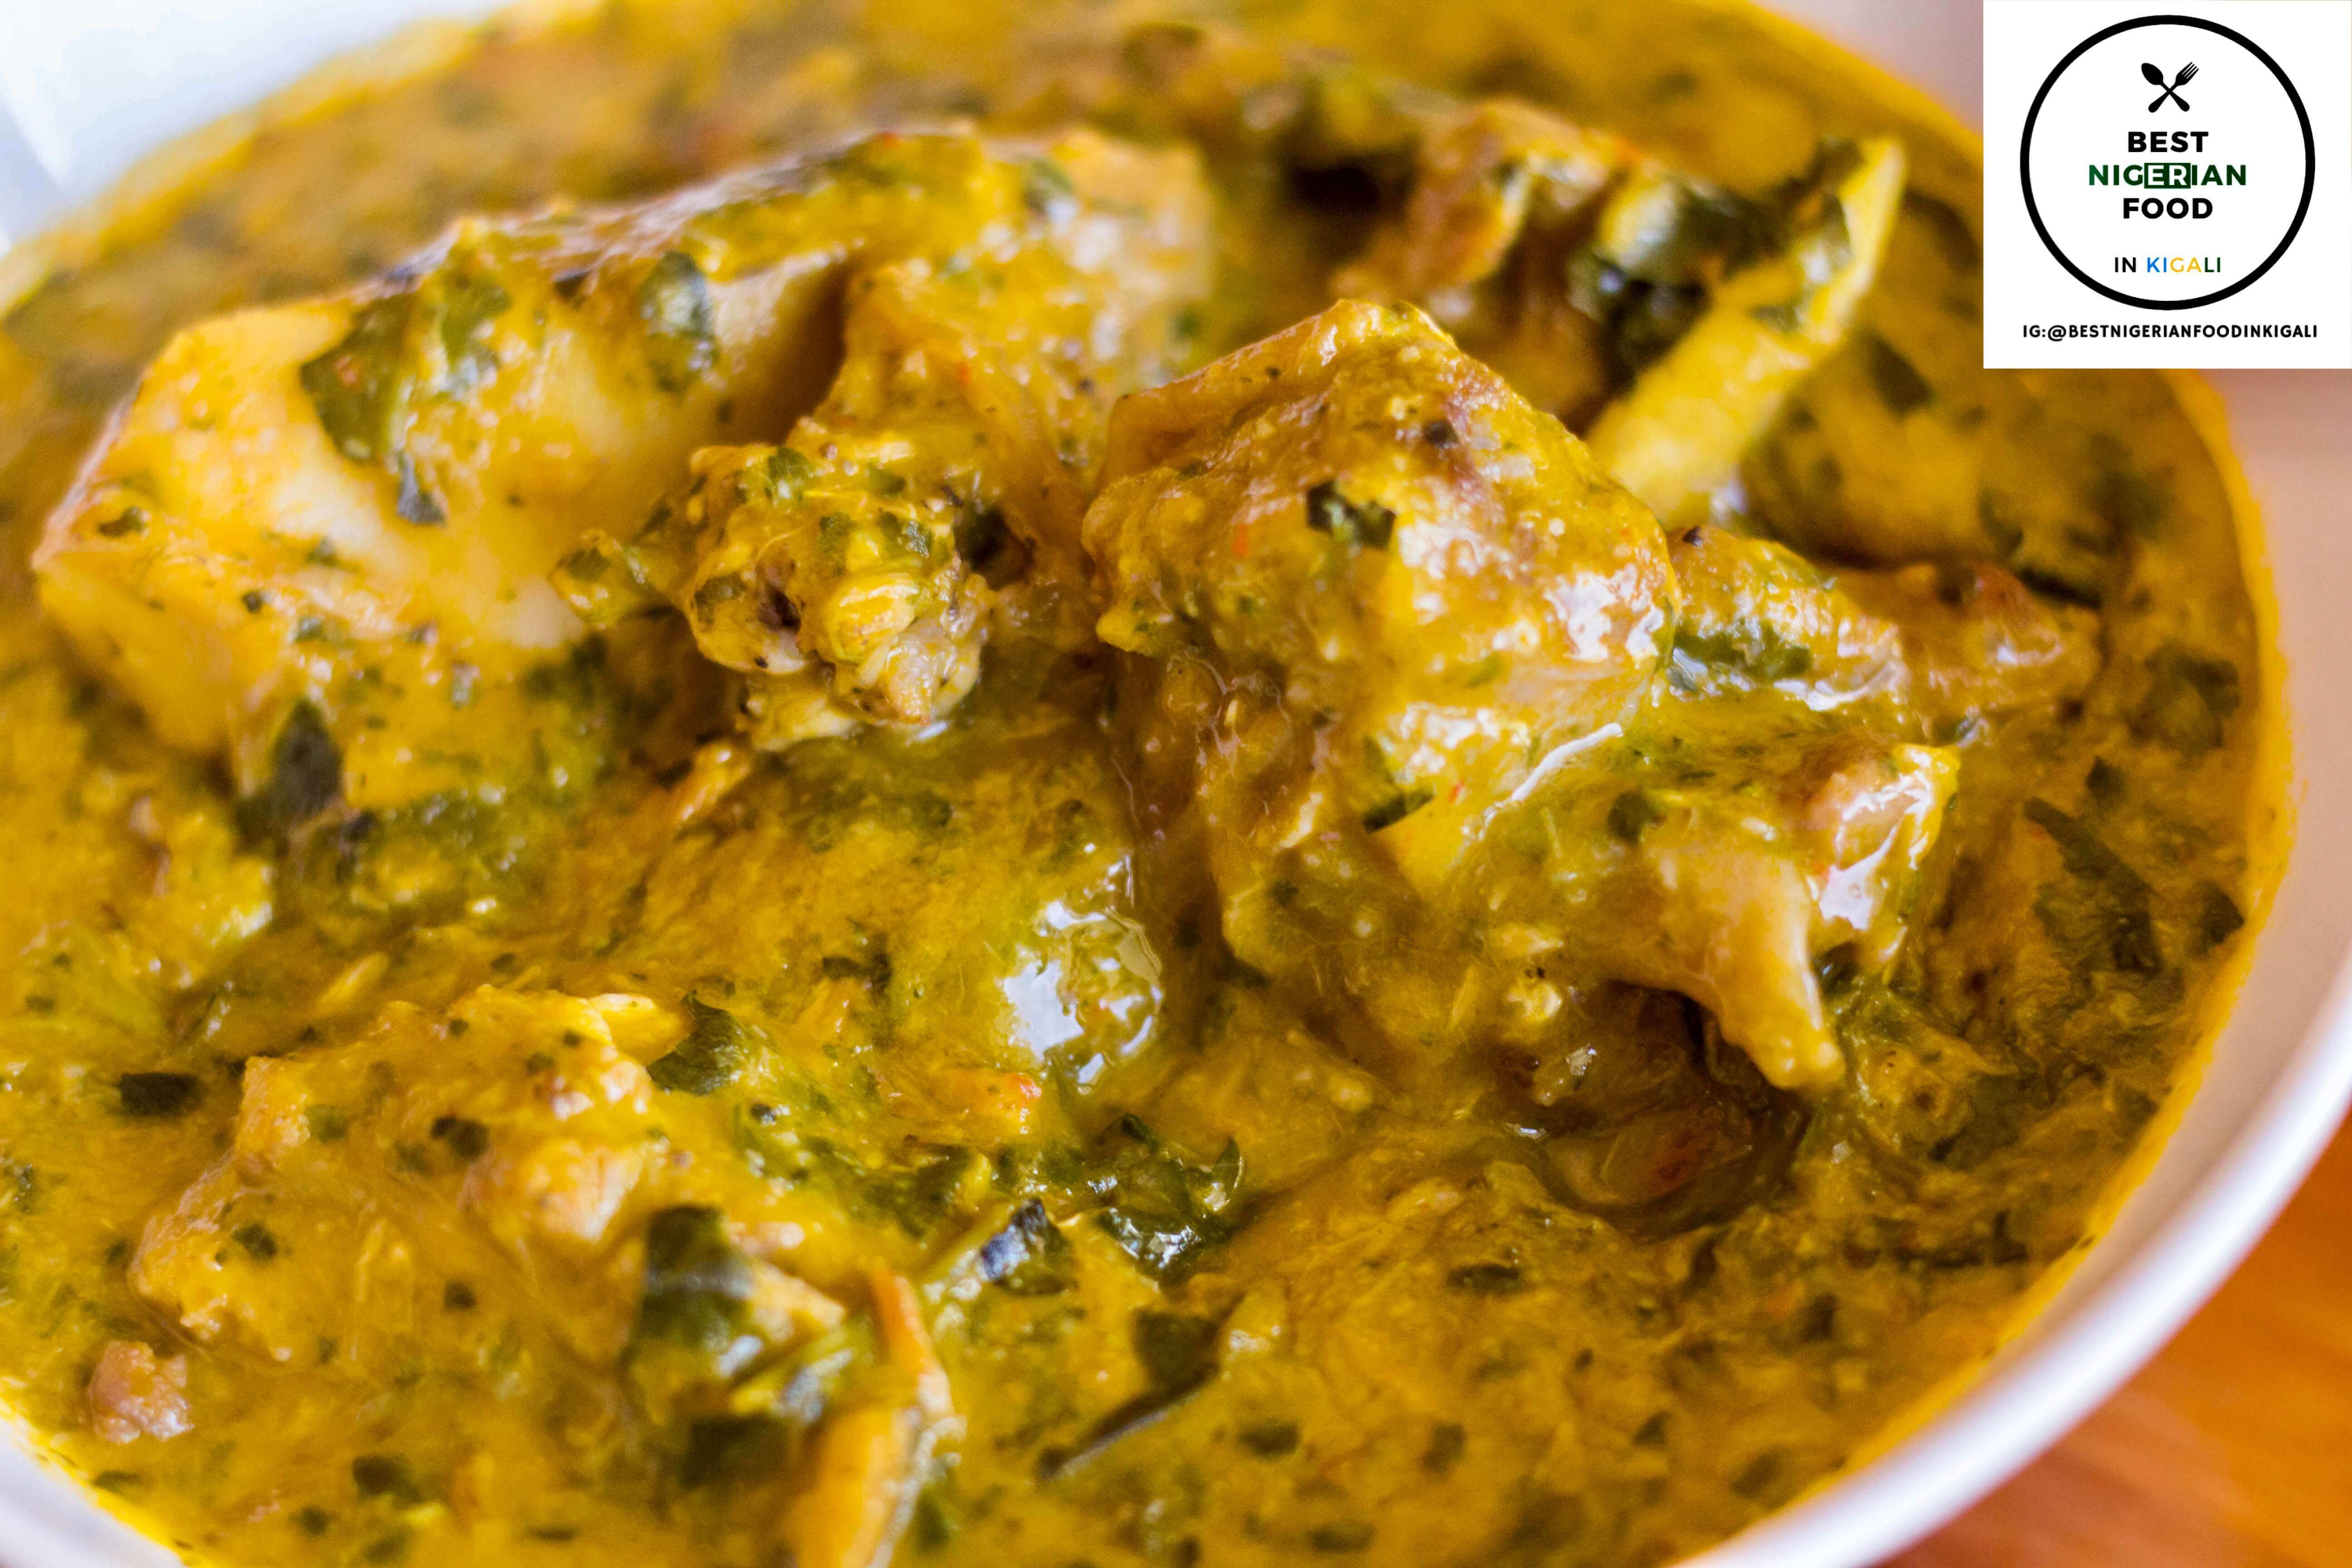 Bitterleaf Soup in Litres - The Best Nigerian Food in Kigali